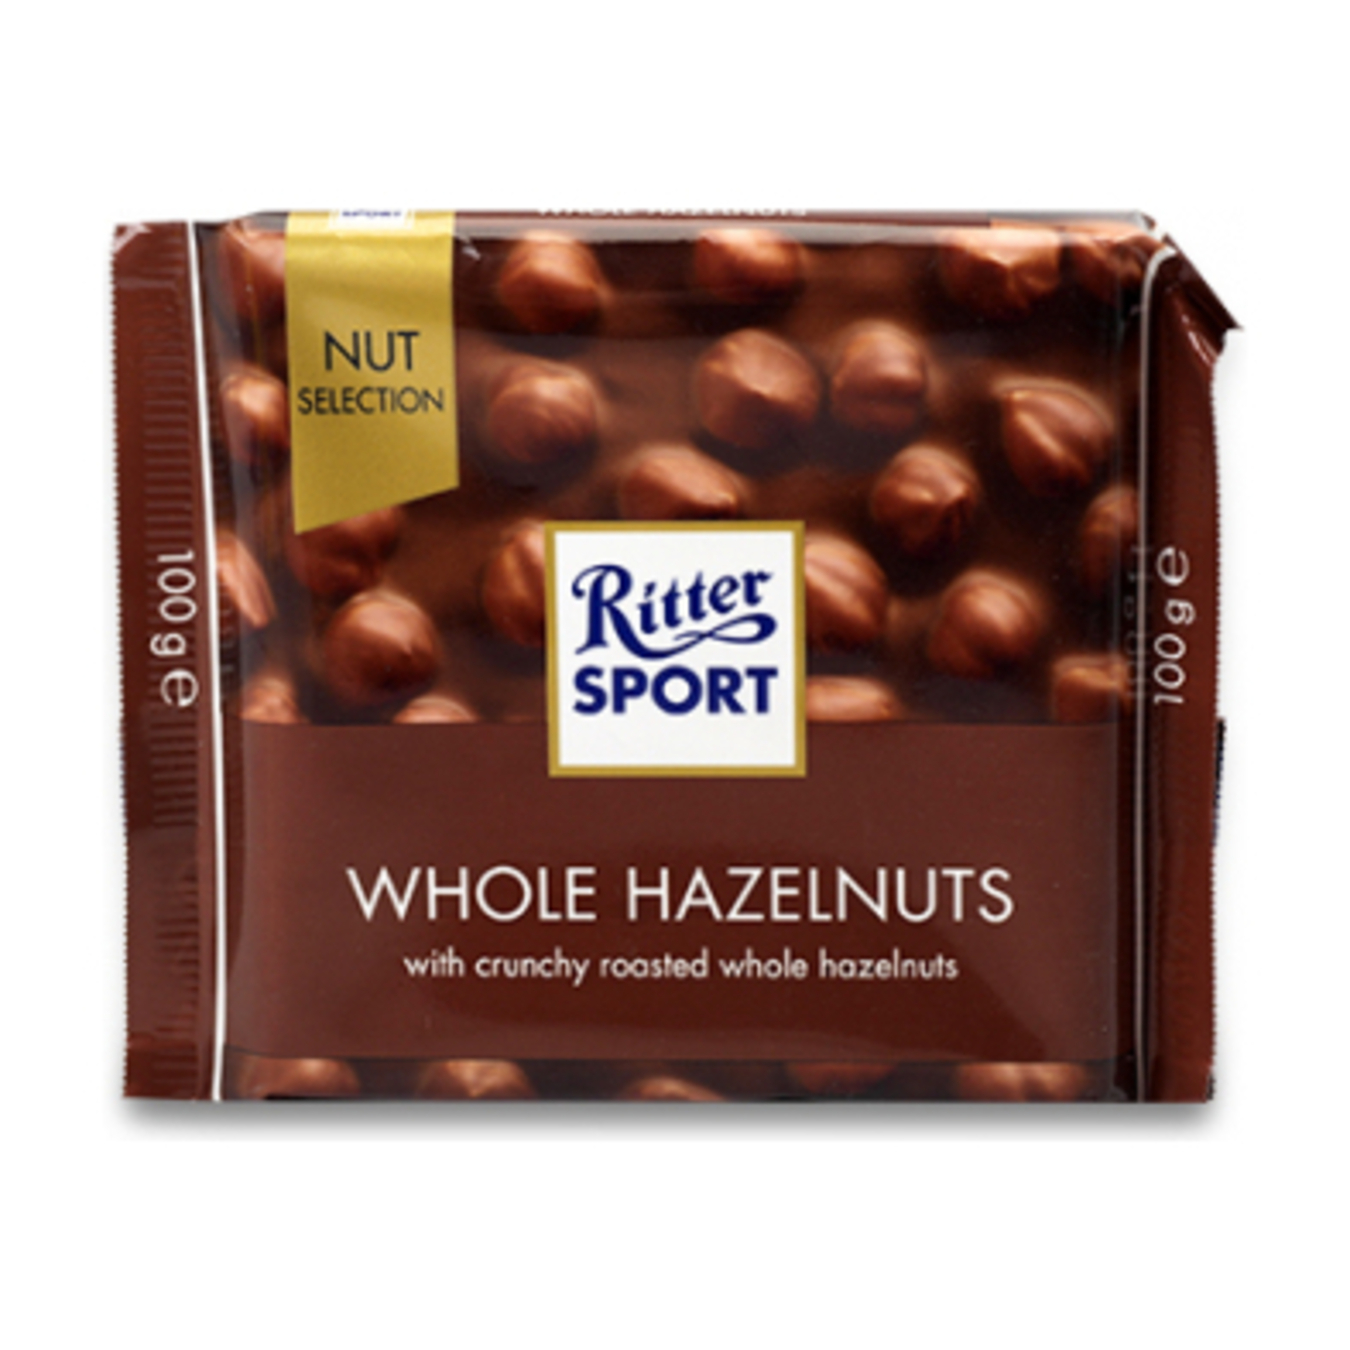 Ritter sport whole hazelnuts milk chocolate 100g